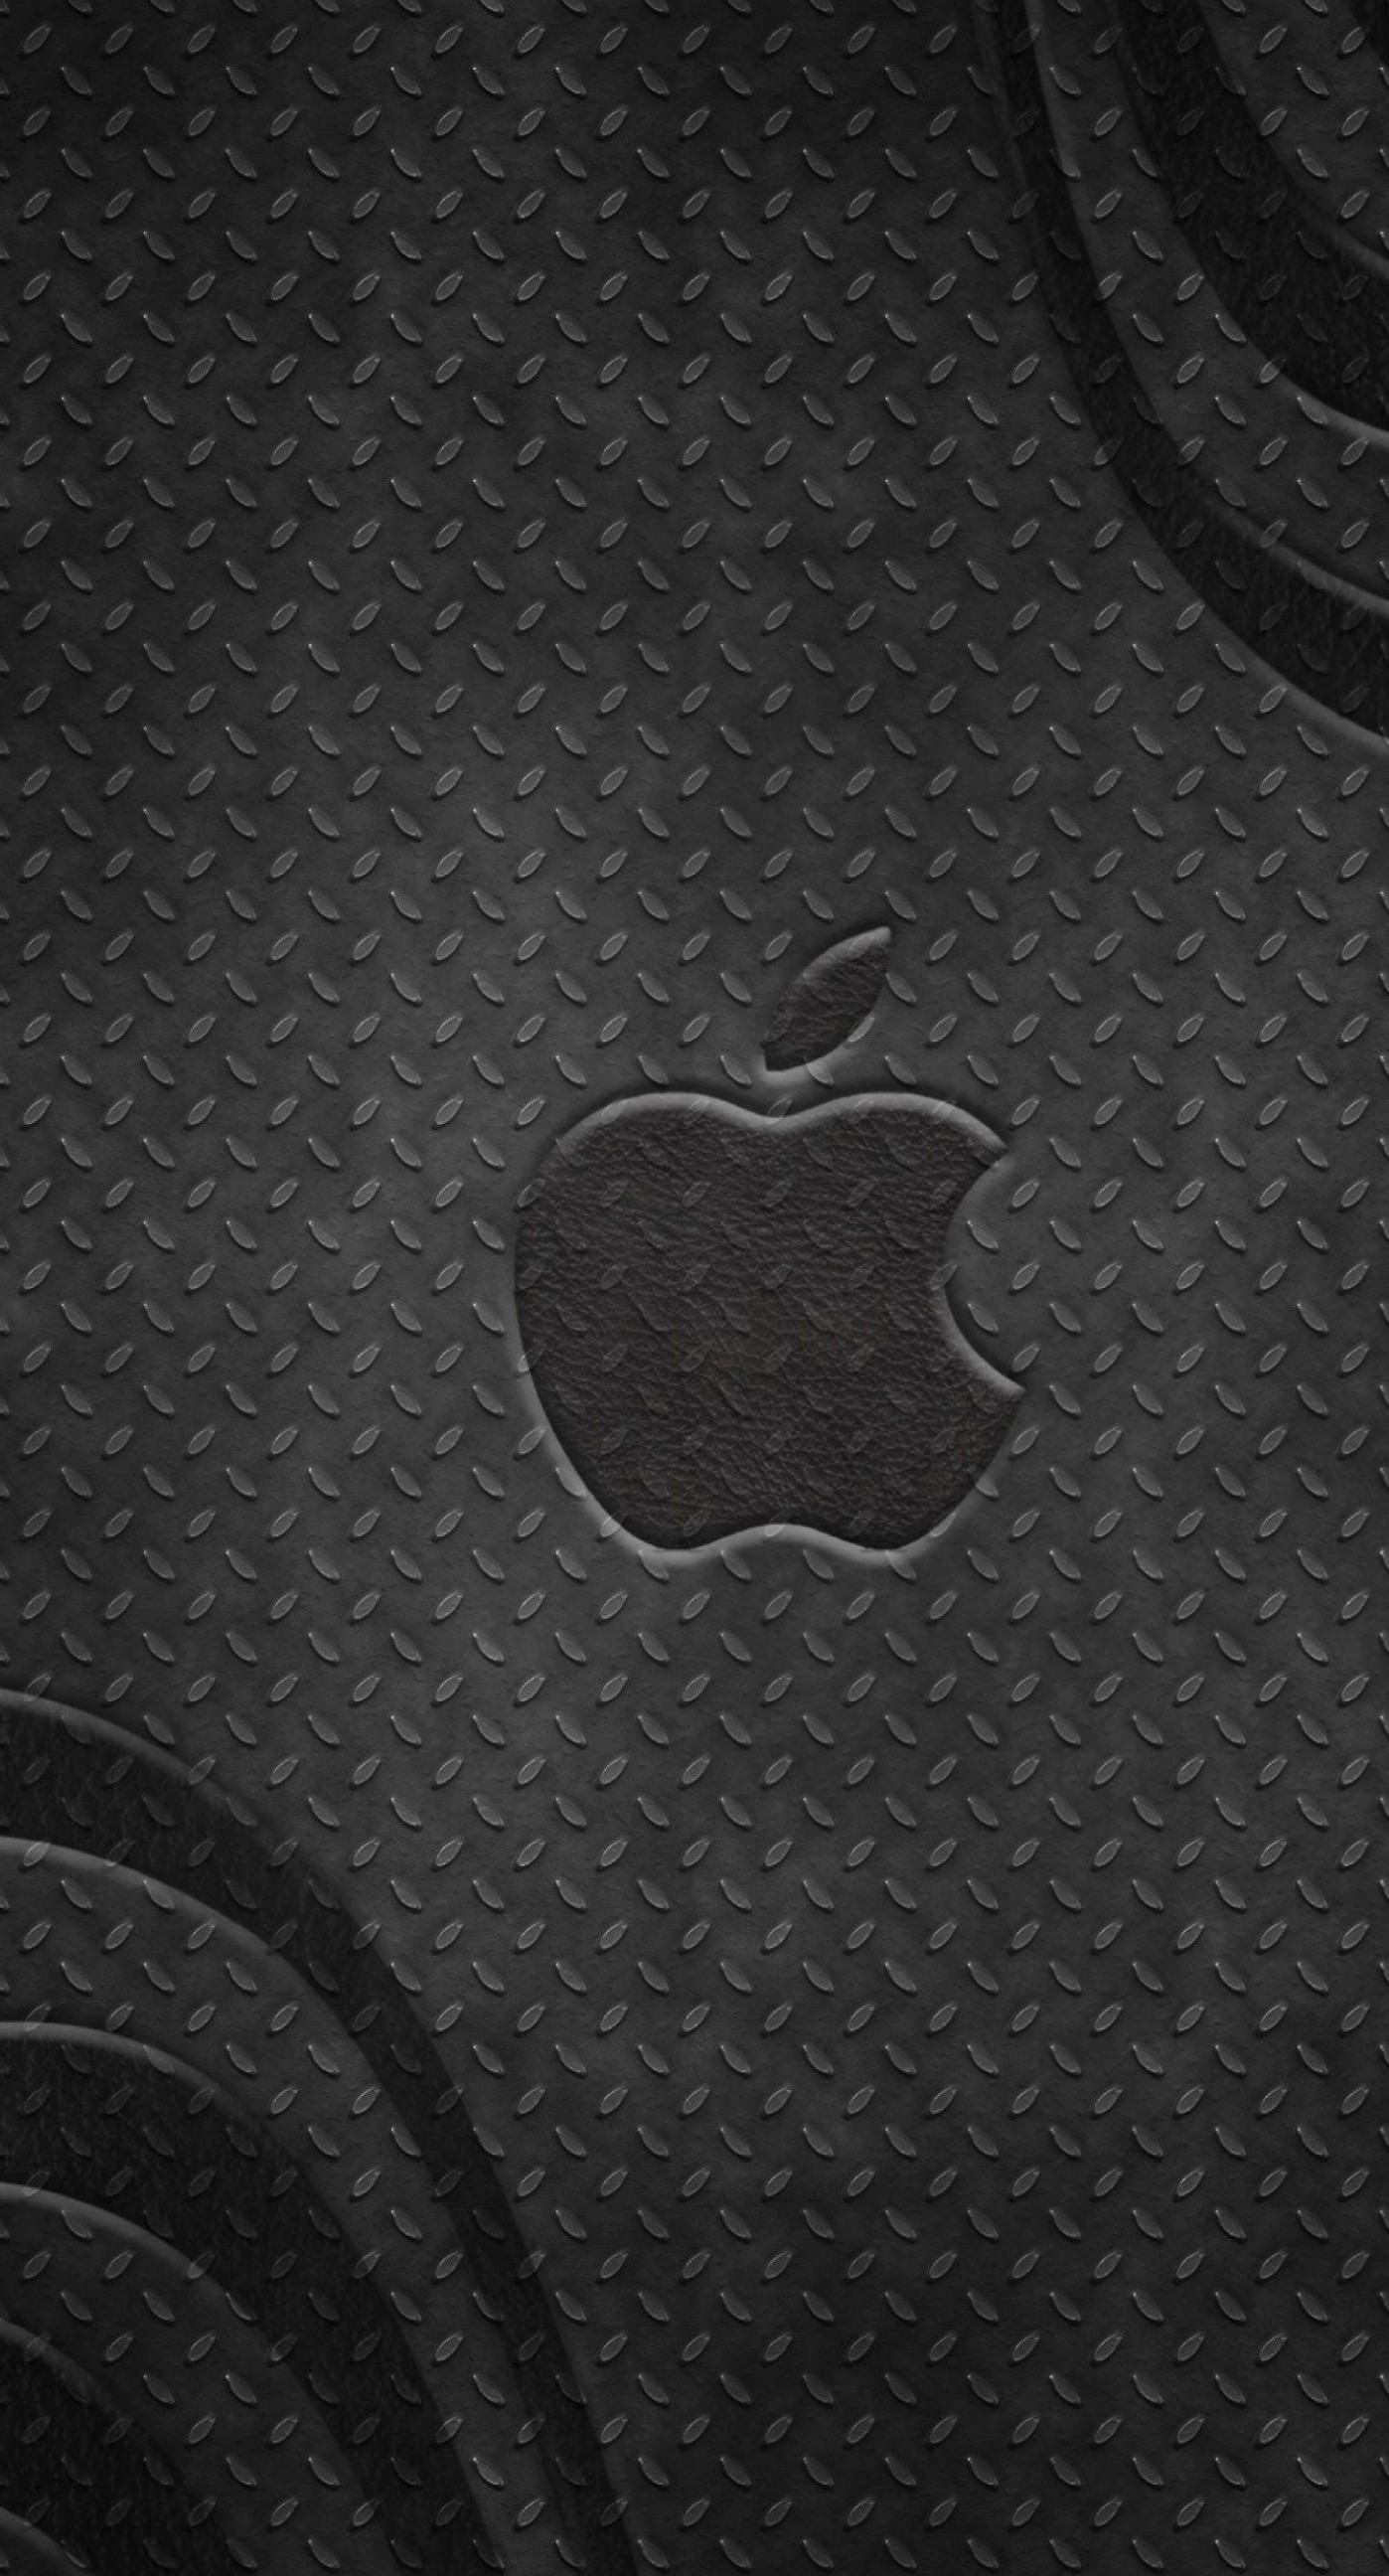 Apple Black Wallpaper Sc Iphone7plus